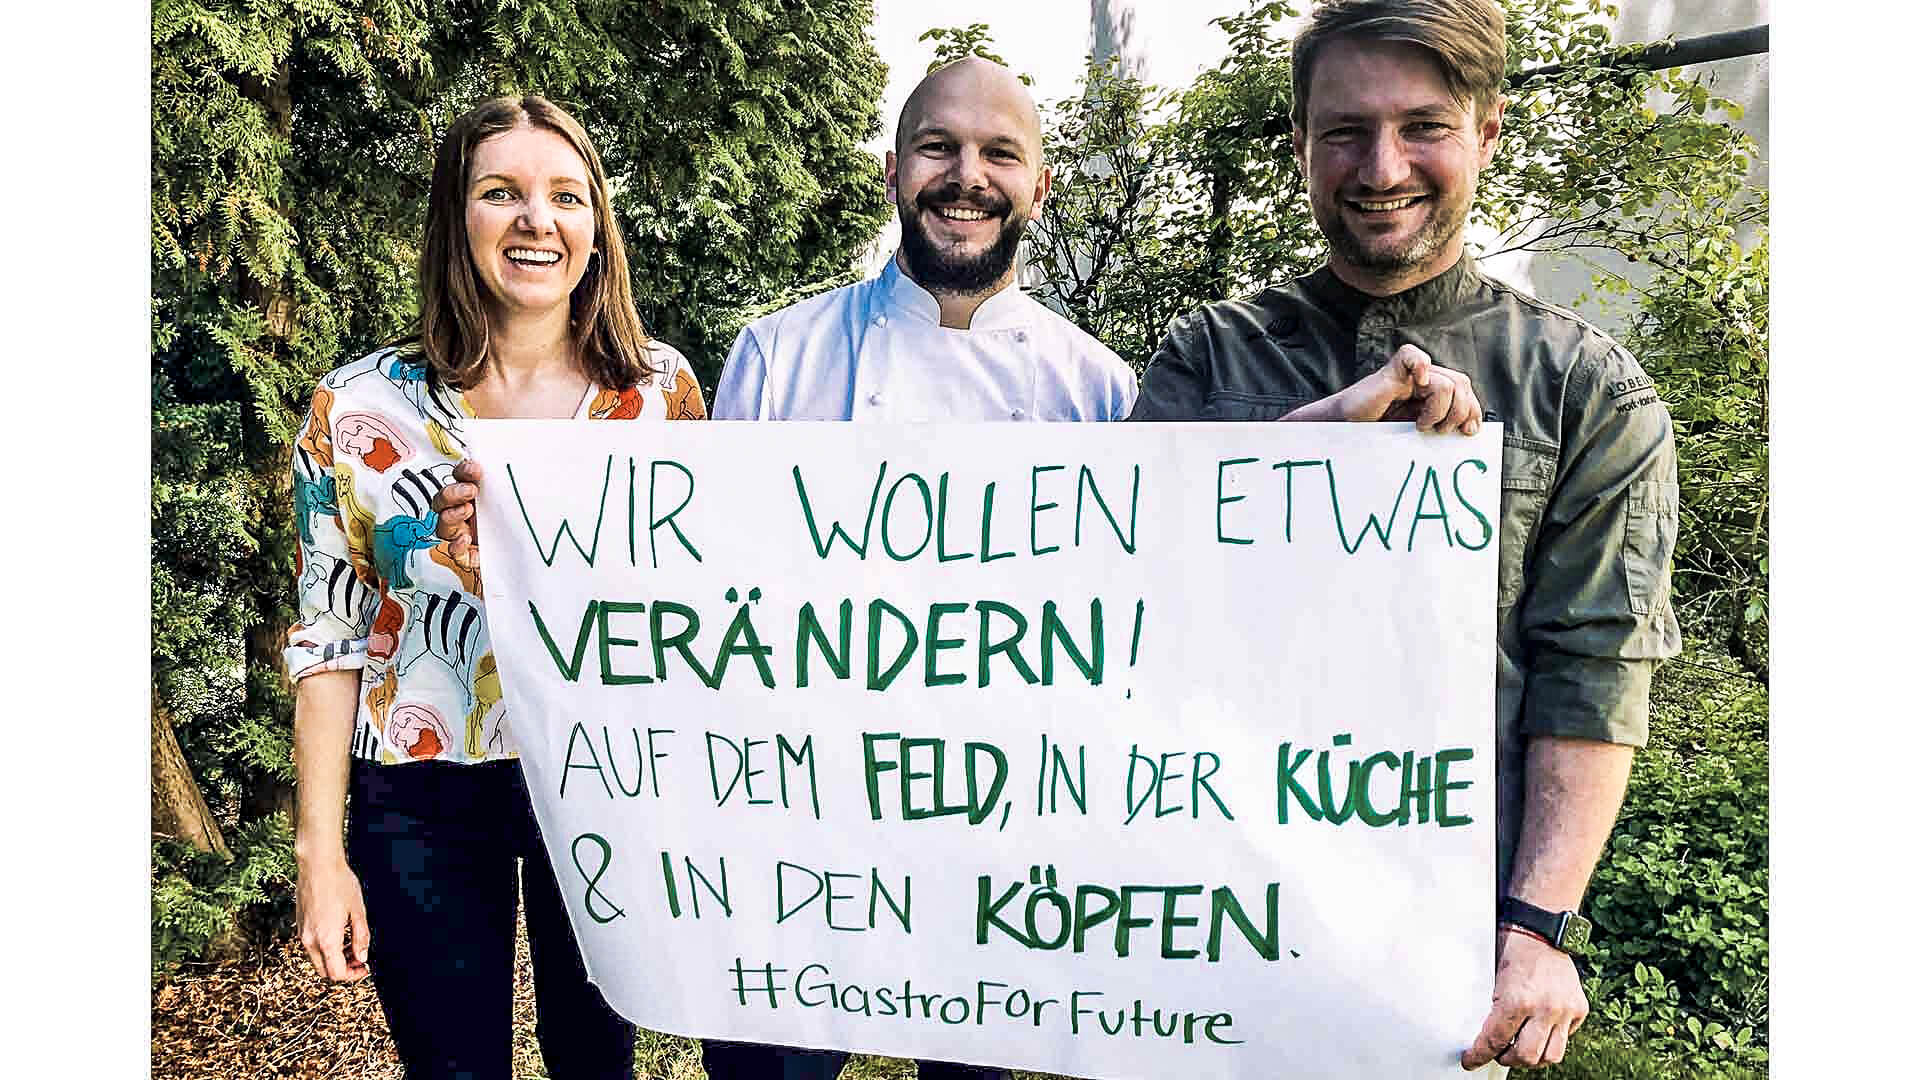 Greentable campaign #GastroForFuture with Friederike Gaedke, Die Gemeinschaft e.V. – Micha Schäfer, Nobelhart and Schmutzig – Sebastian Frank, Horvath